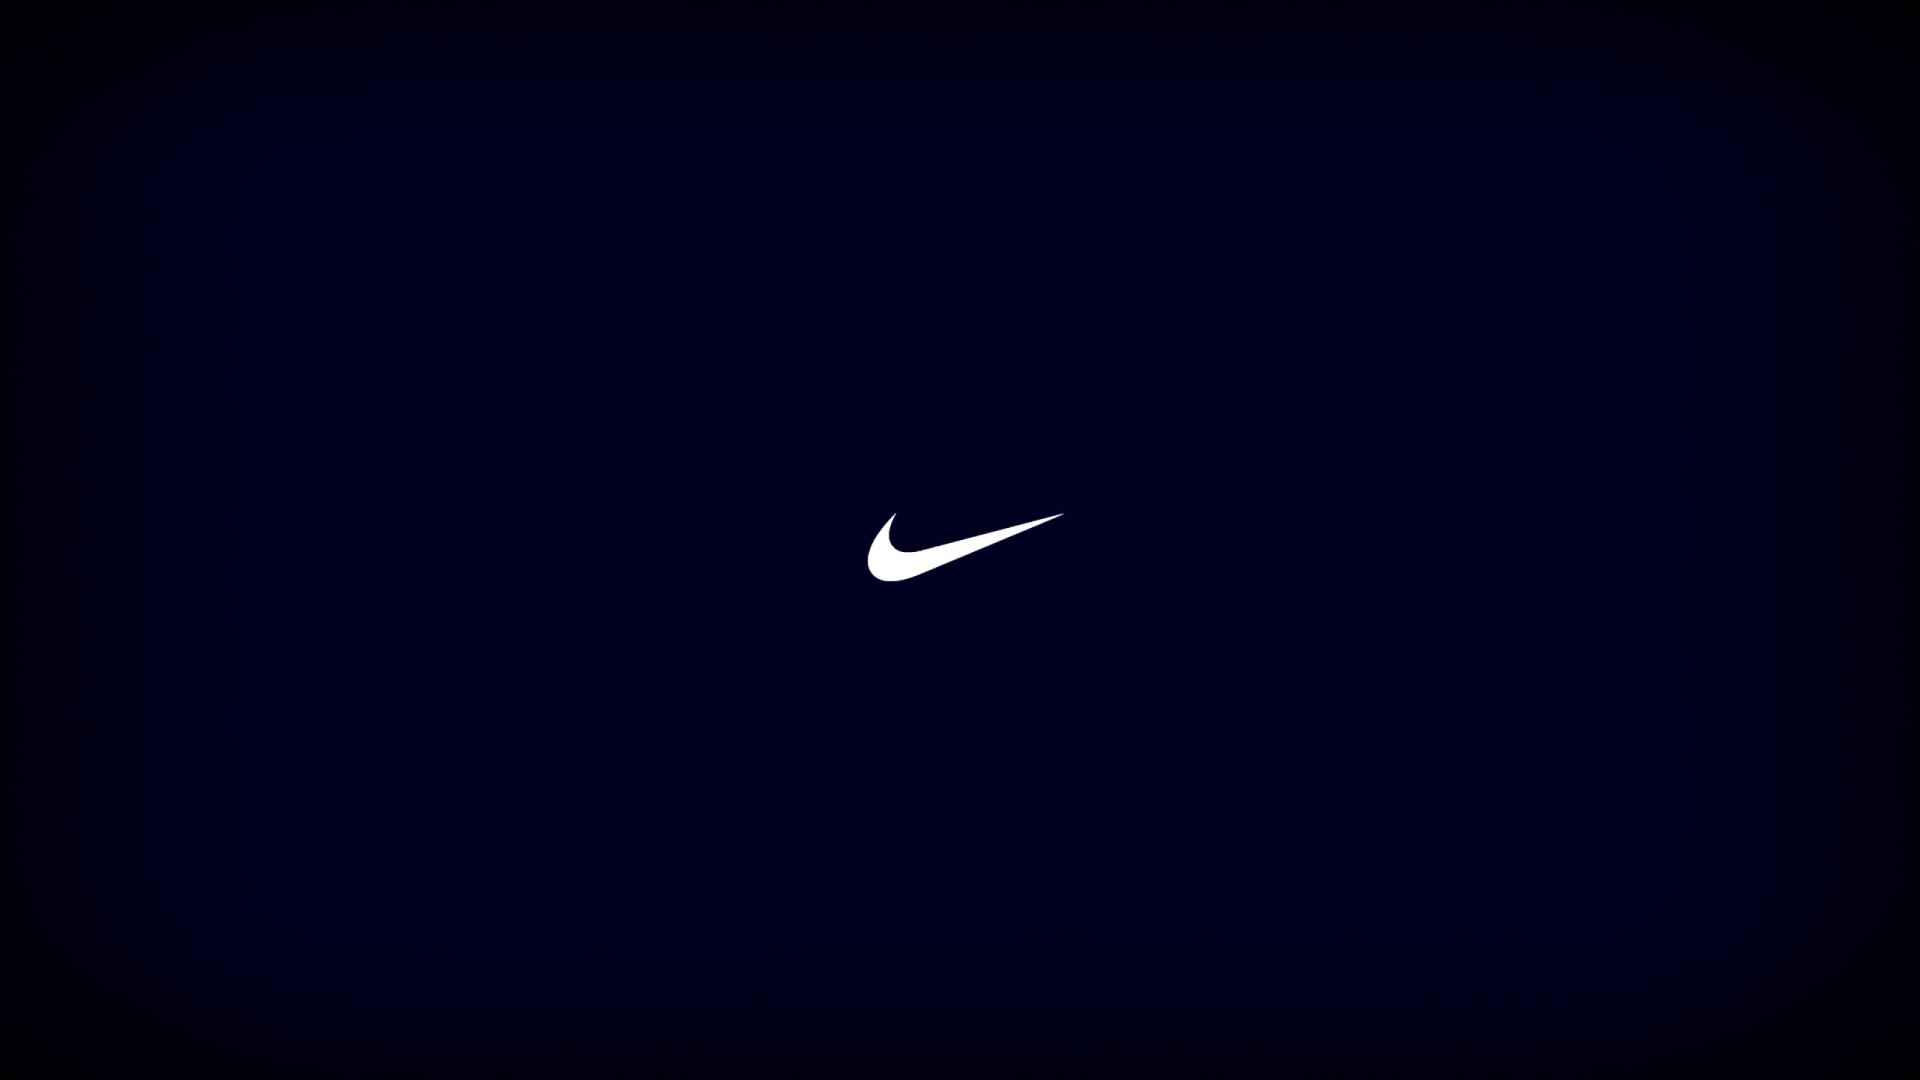 Nike Classic Logo Wallpaper Pics High